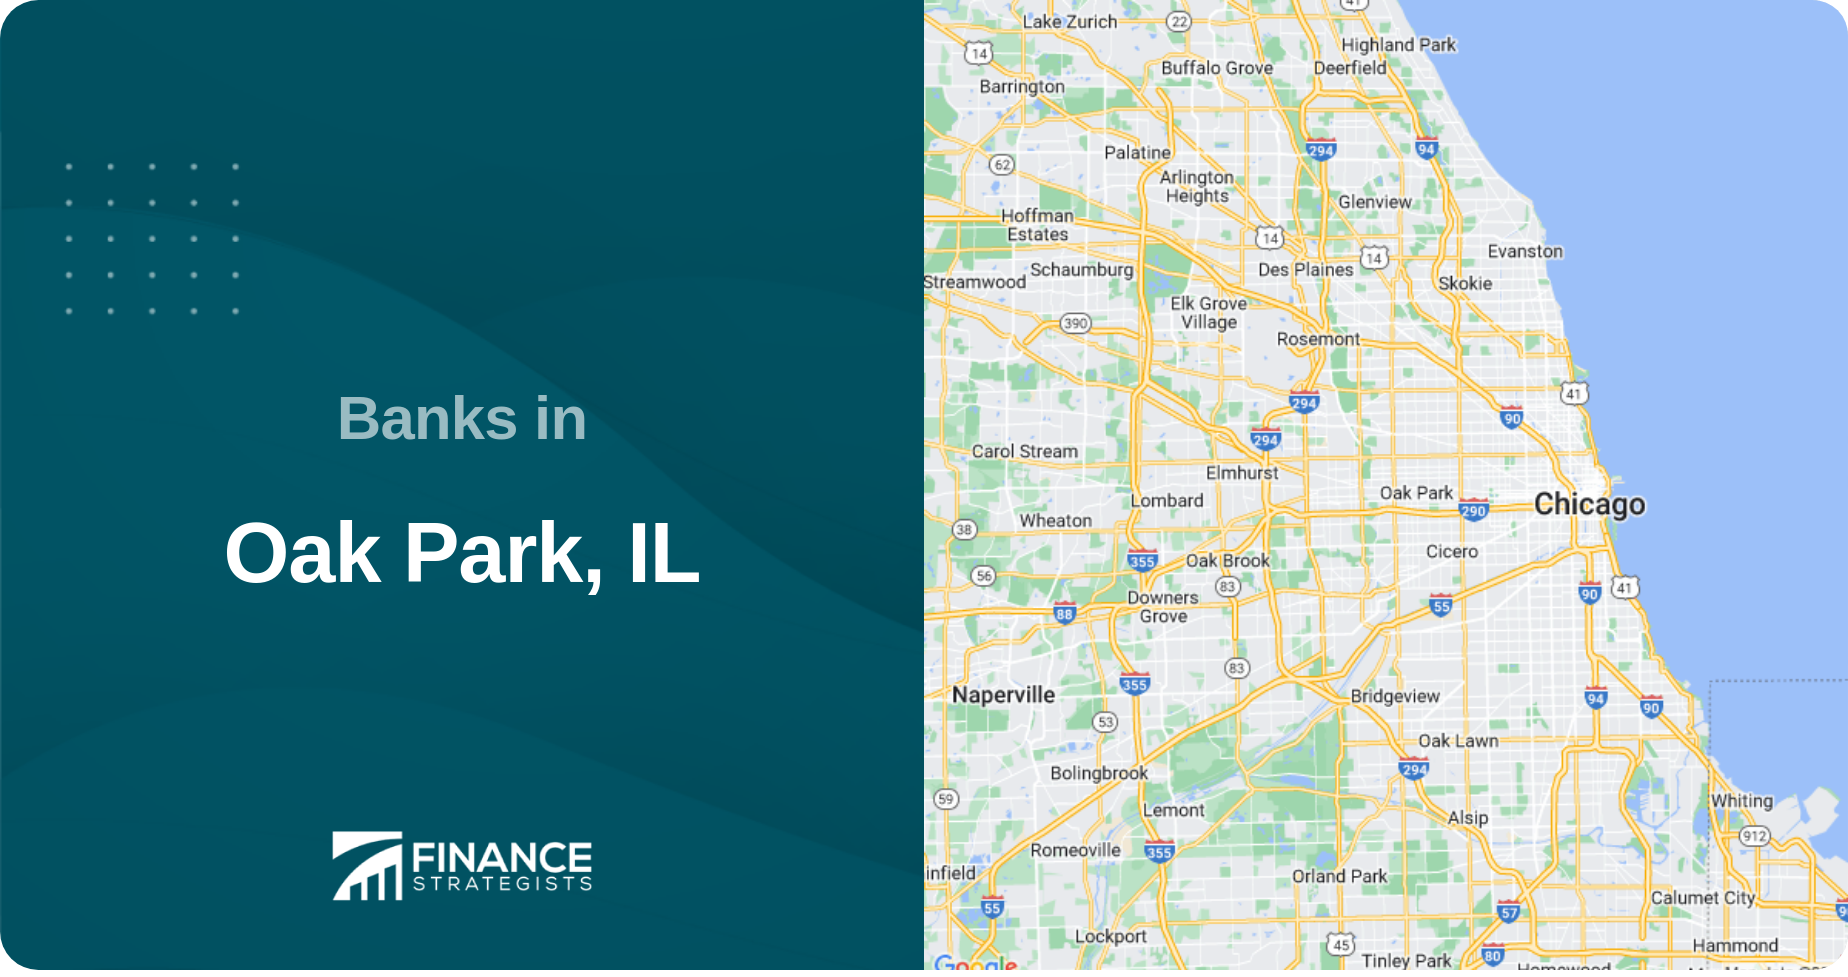 Banks in Oak Park, IL